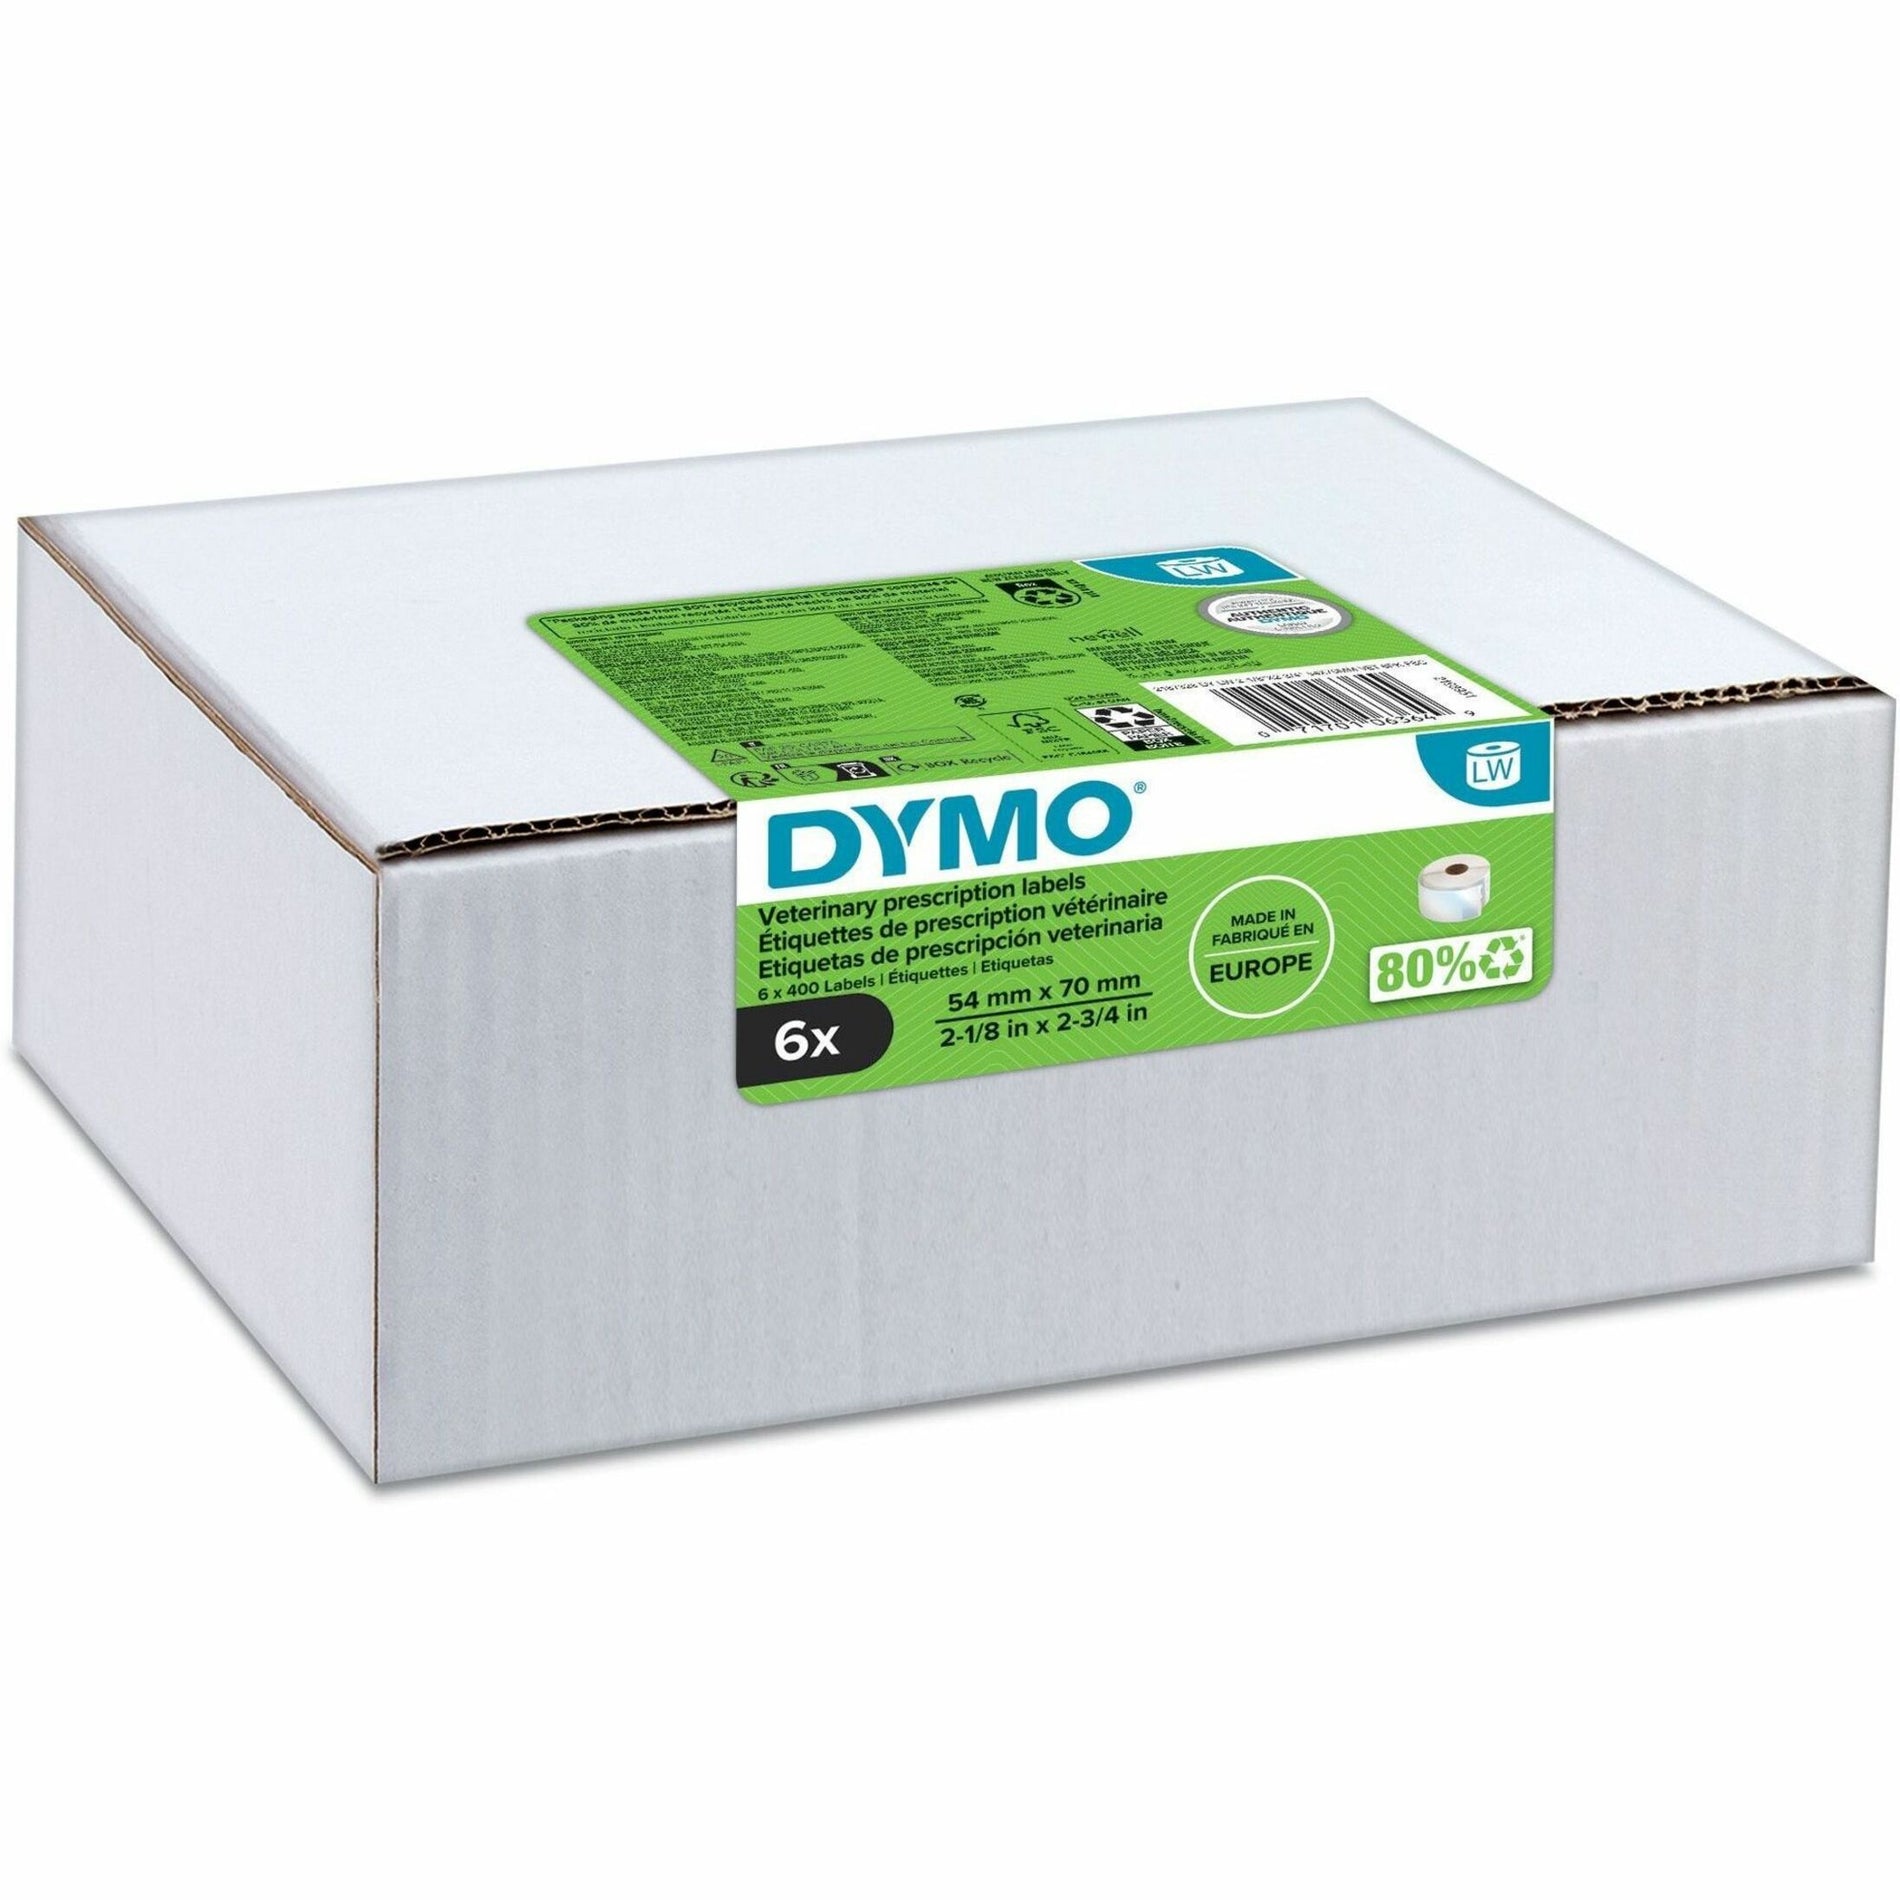 Dymo LabelWriter Veterinary Labels (2187328)